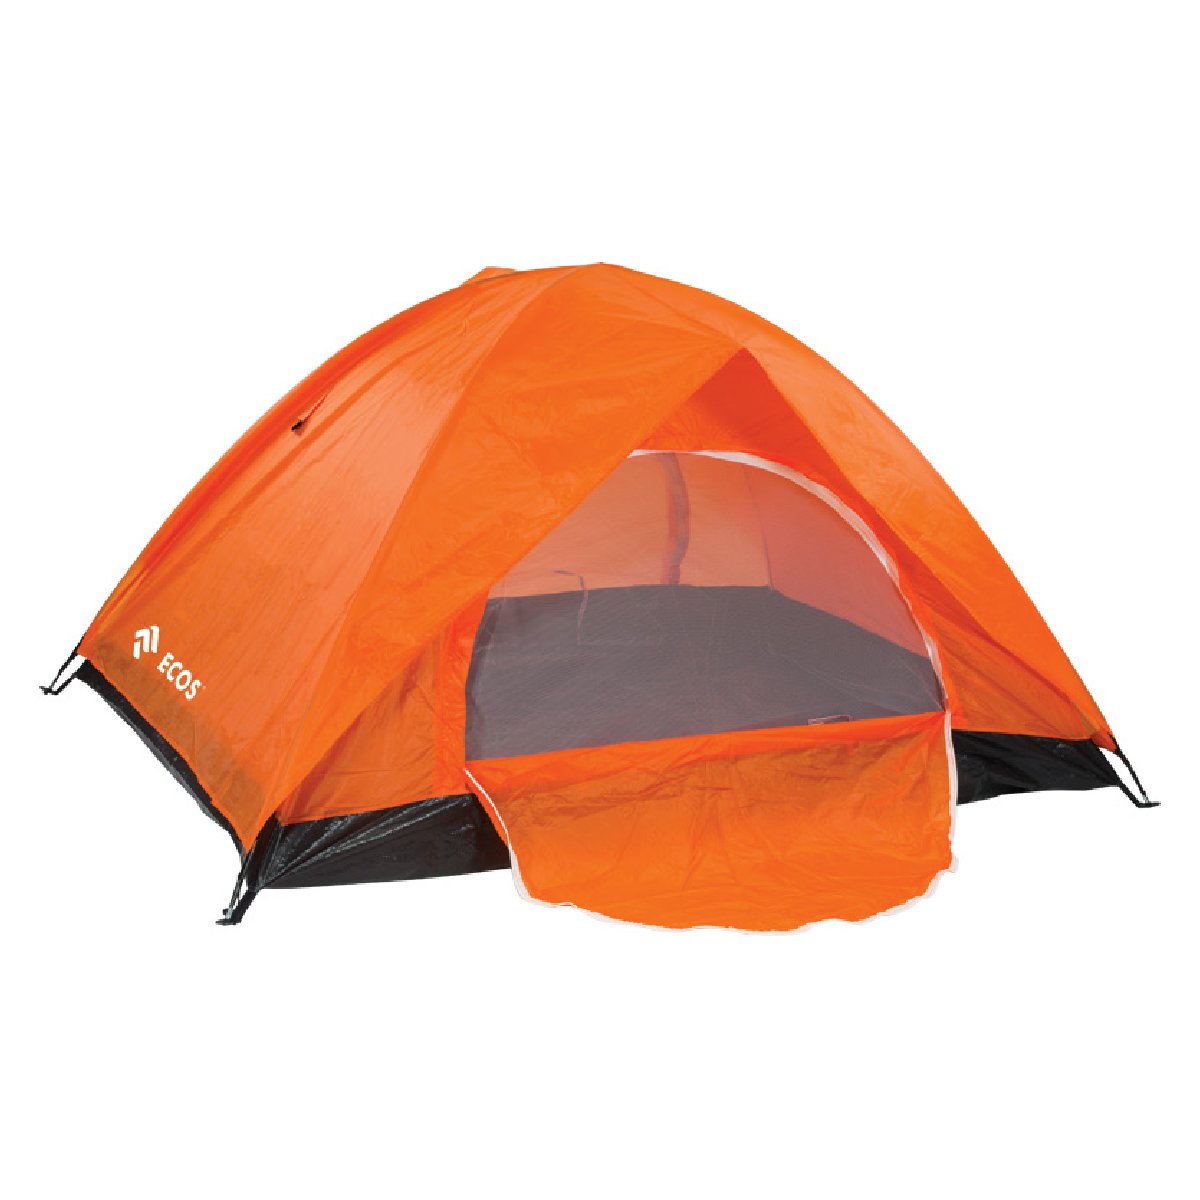 Палатка Pico (210x150x115см) (999273)Купить